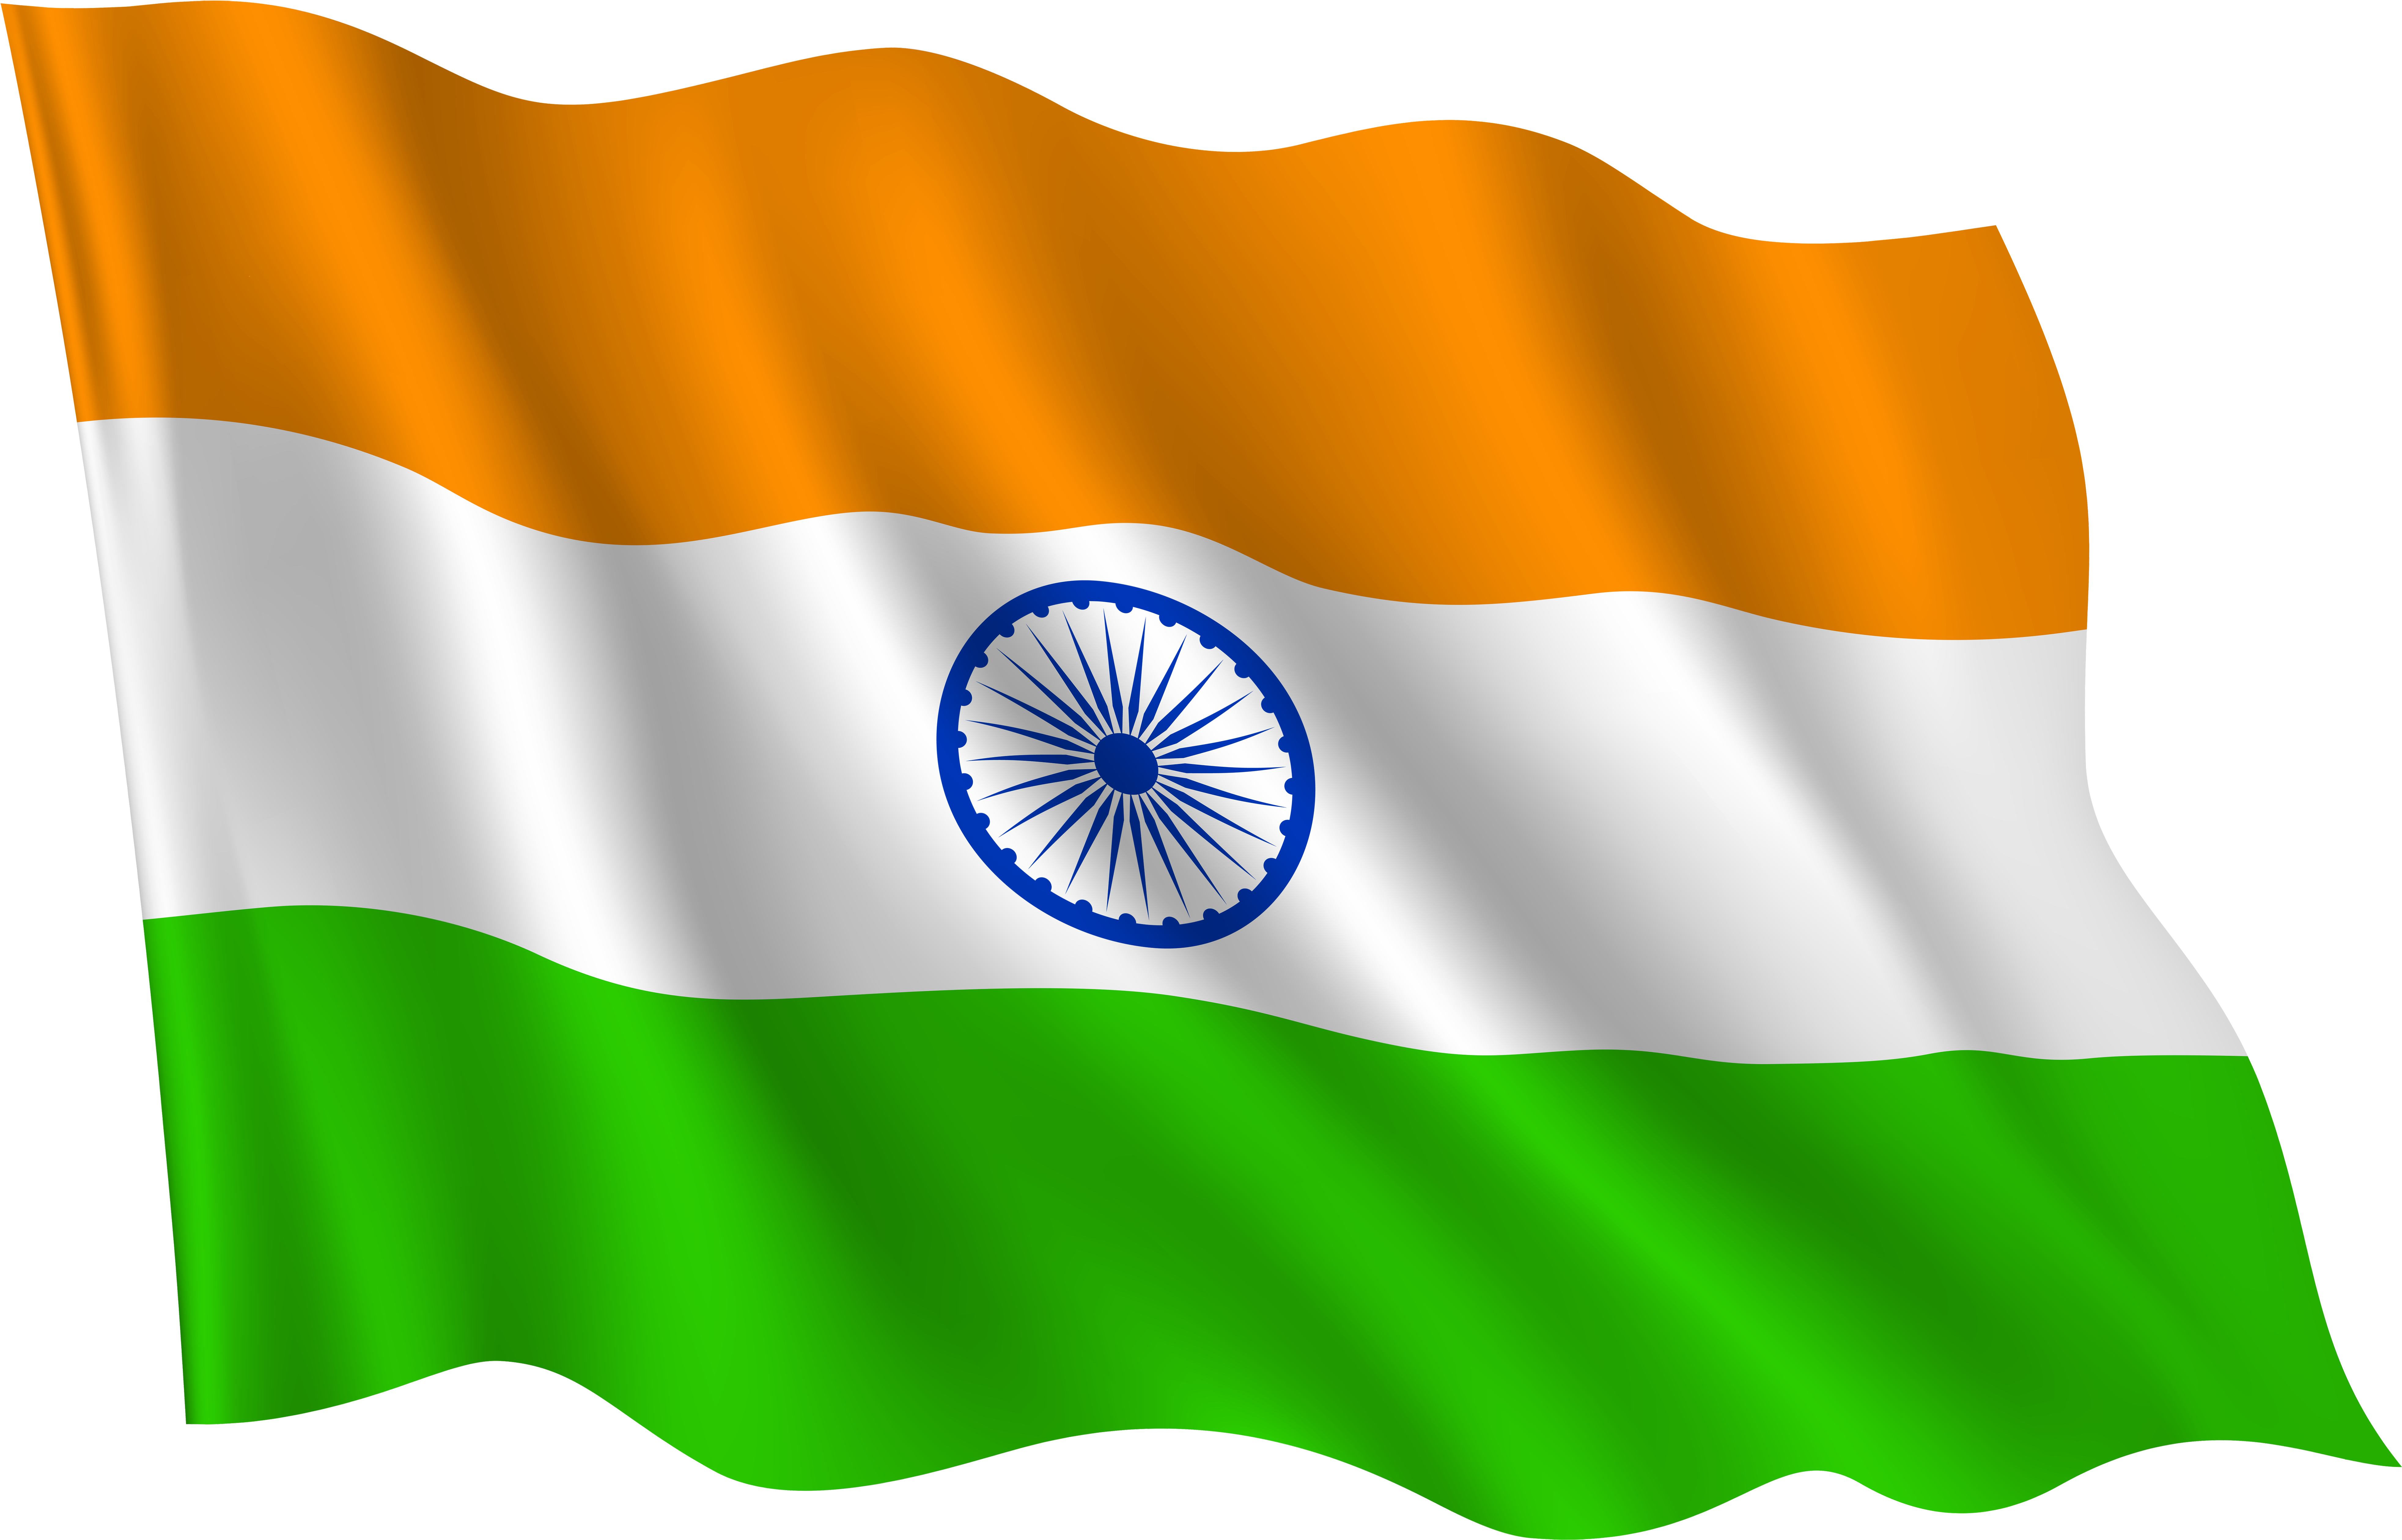 India Team | IND | Match, Live Score, News